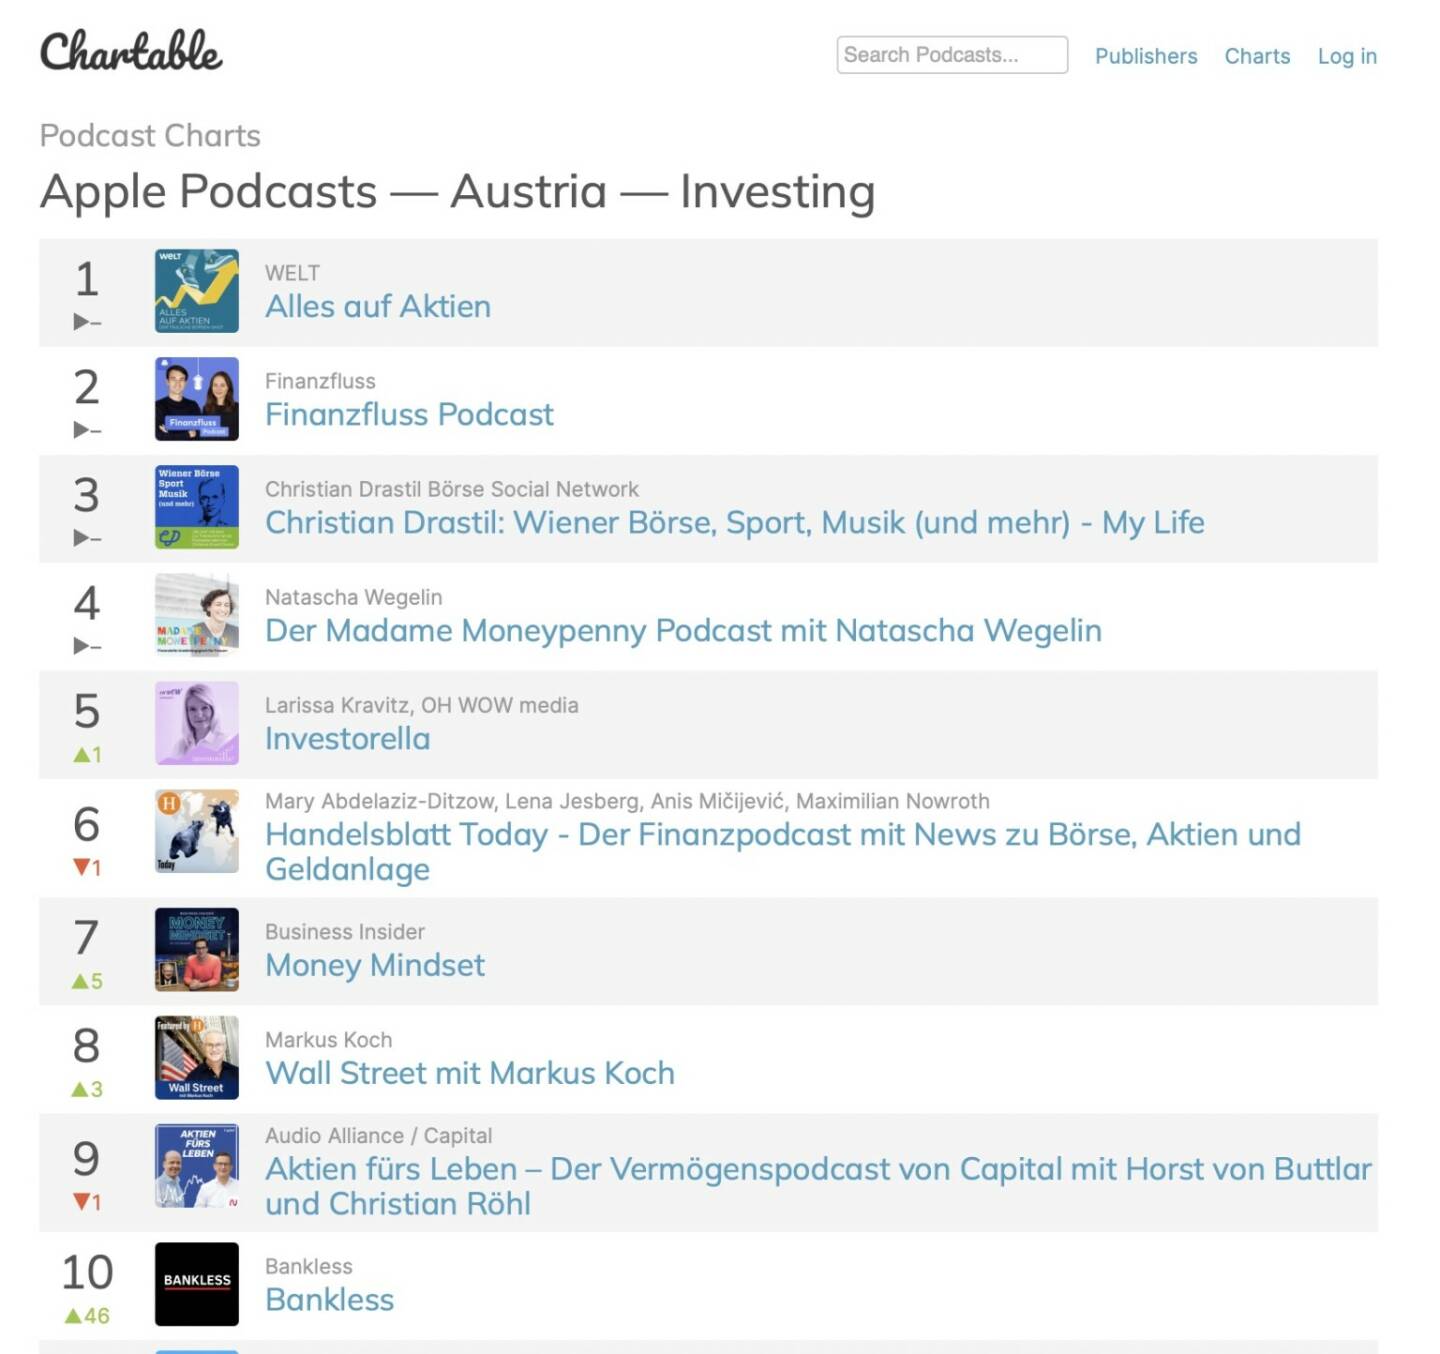 http://www.christian-drastil.com/podcast auf Rang 3 in den Apple Podcast Charts Austria Investing unter fast lauter deutschen Podcasts